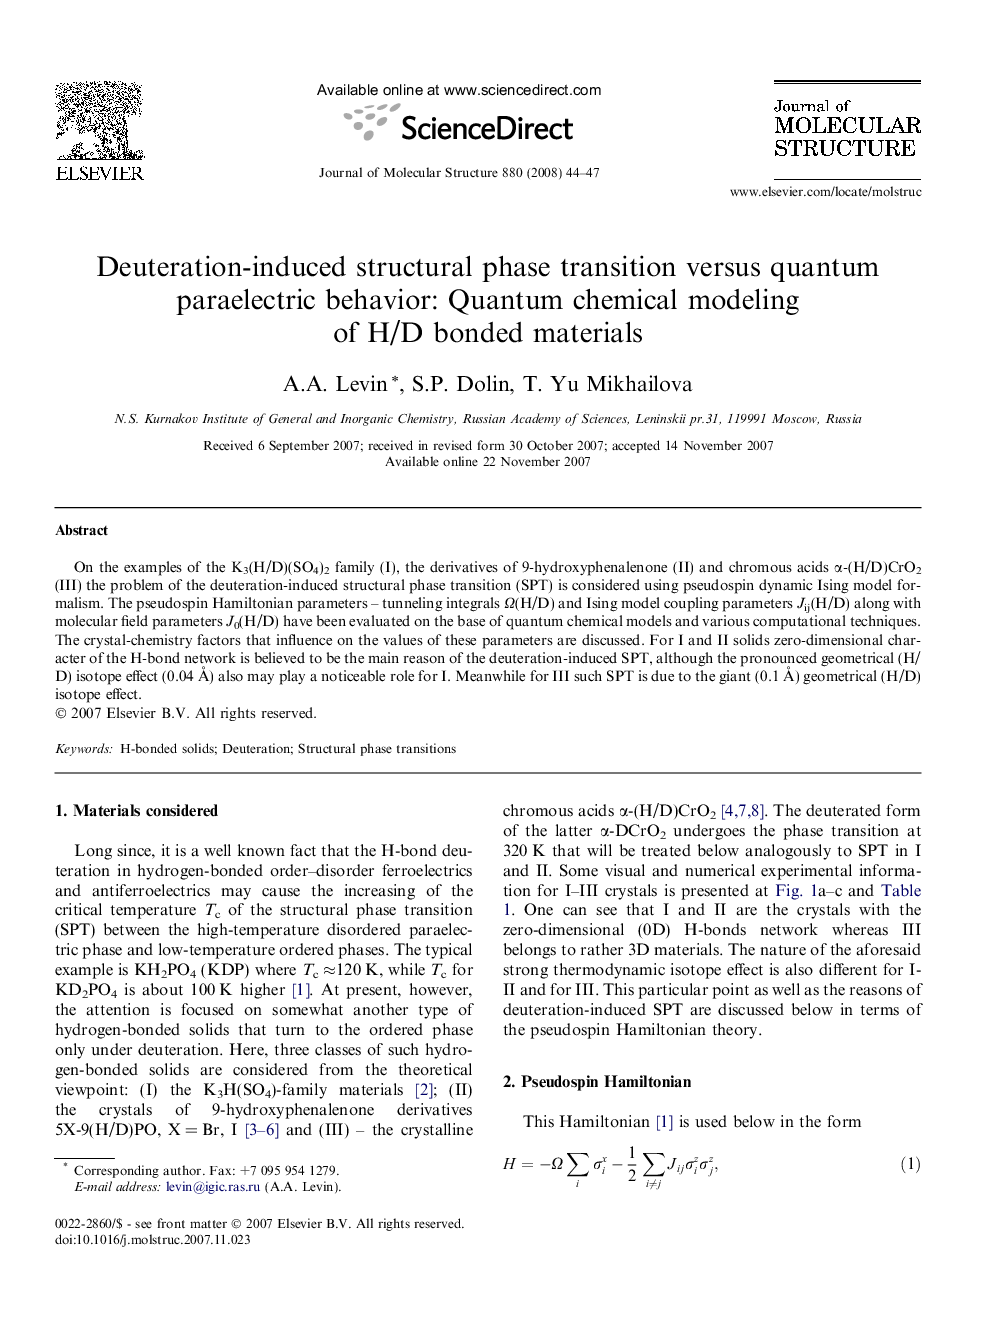 Deuteration-induced structural phase transition versus quantum paraelectric behavior: Quantum chemical modeling of H/D bonded materials